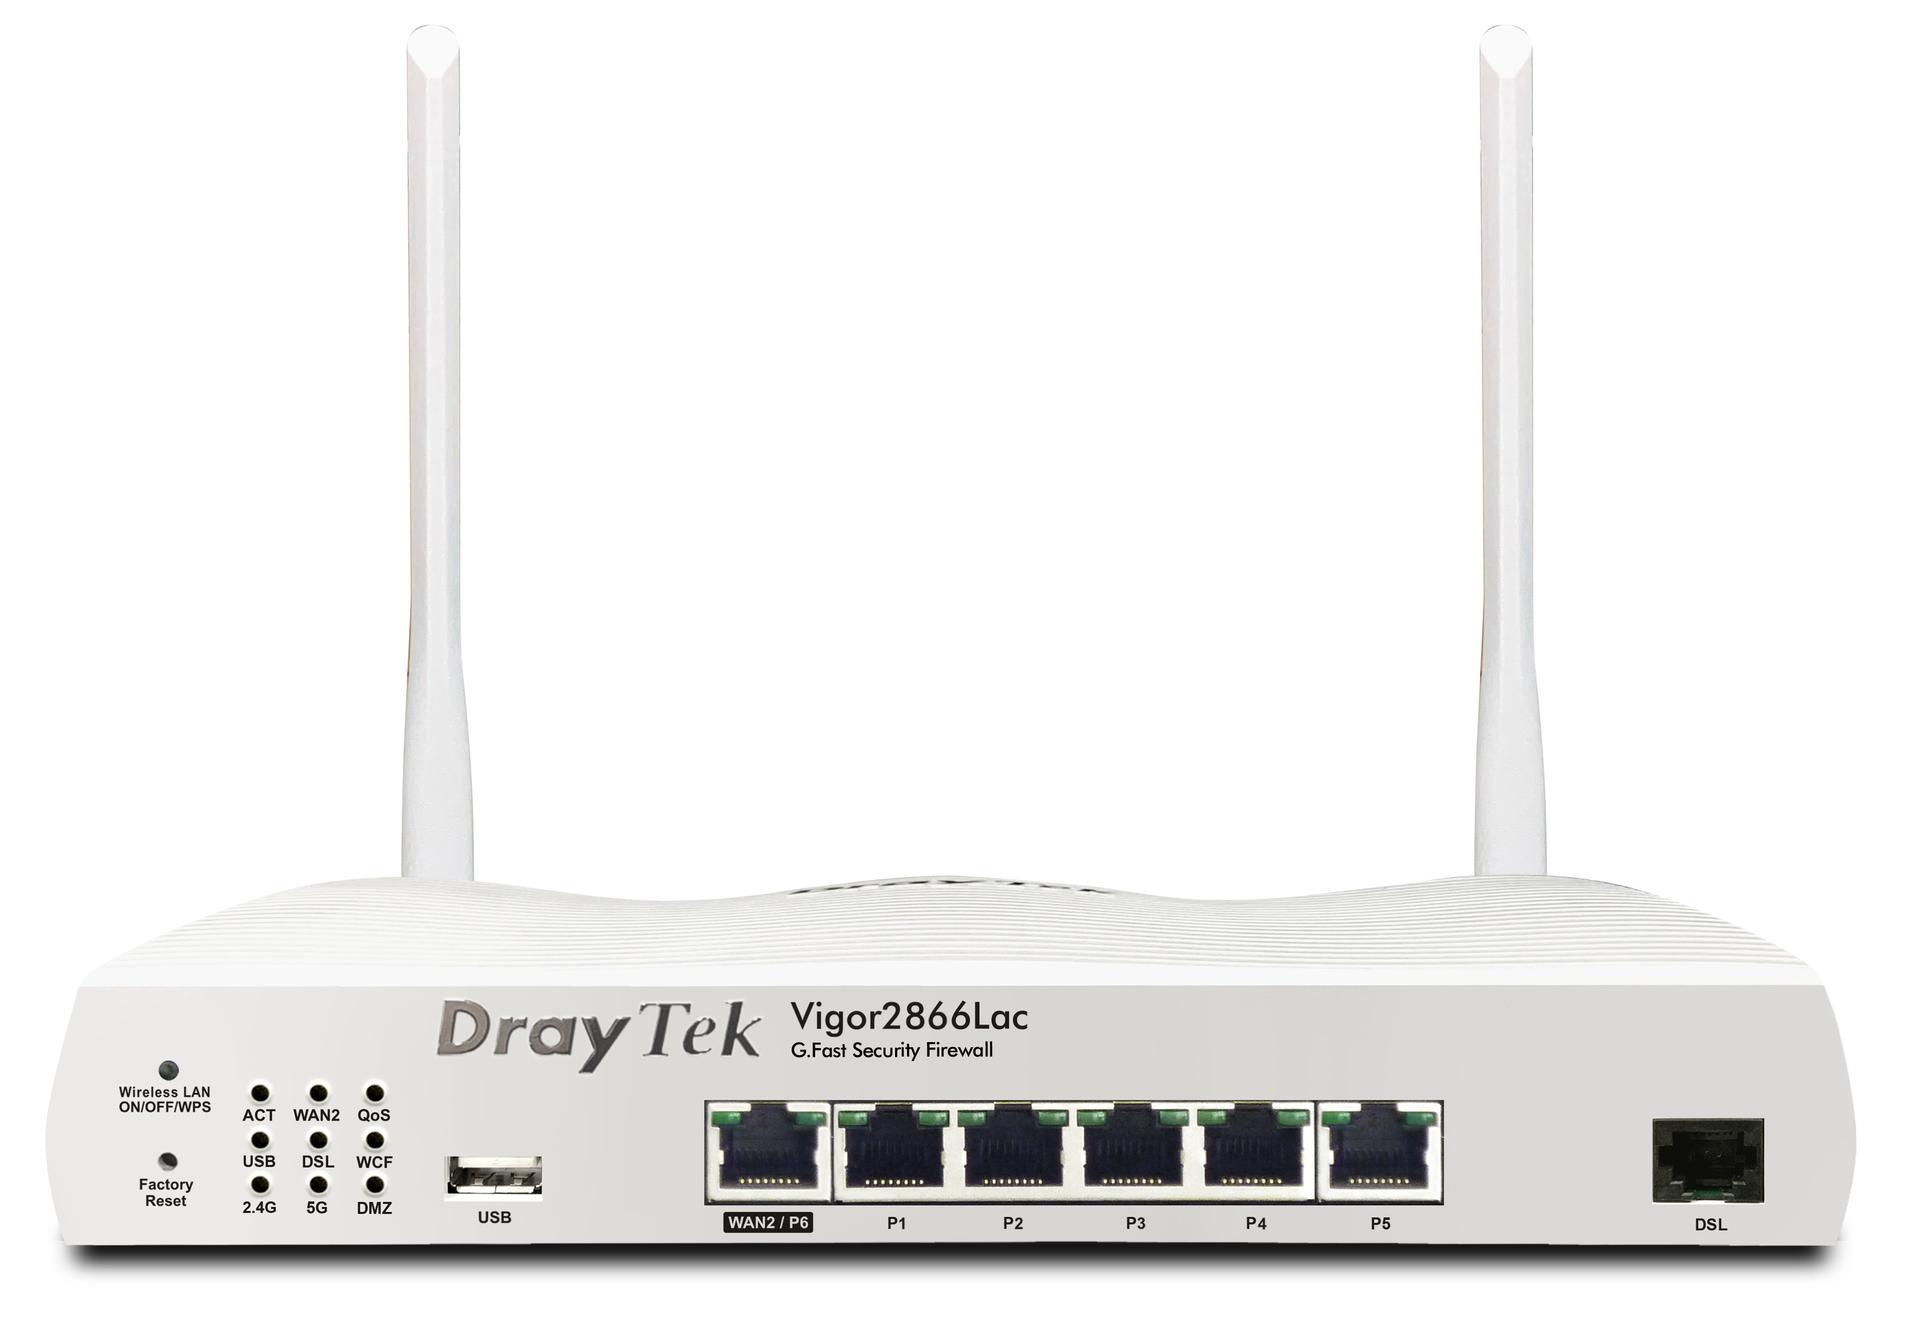 DrayTek V2866Lac G.Fast Router Front Image